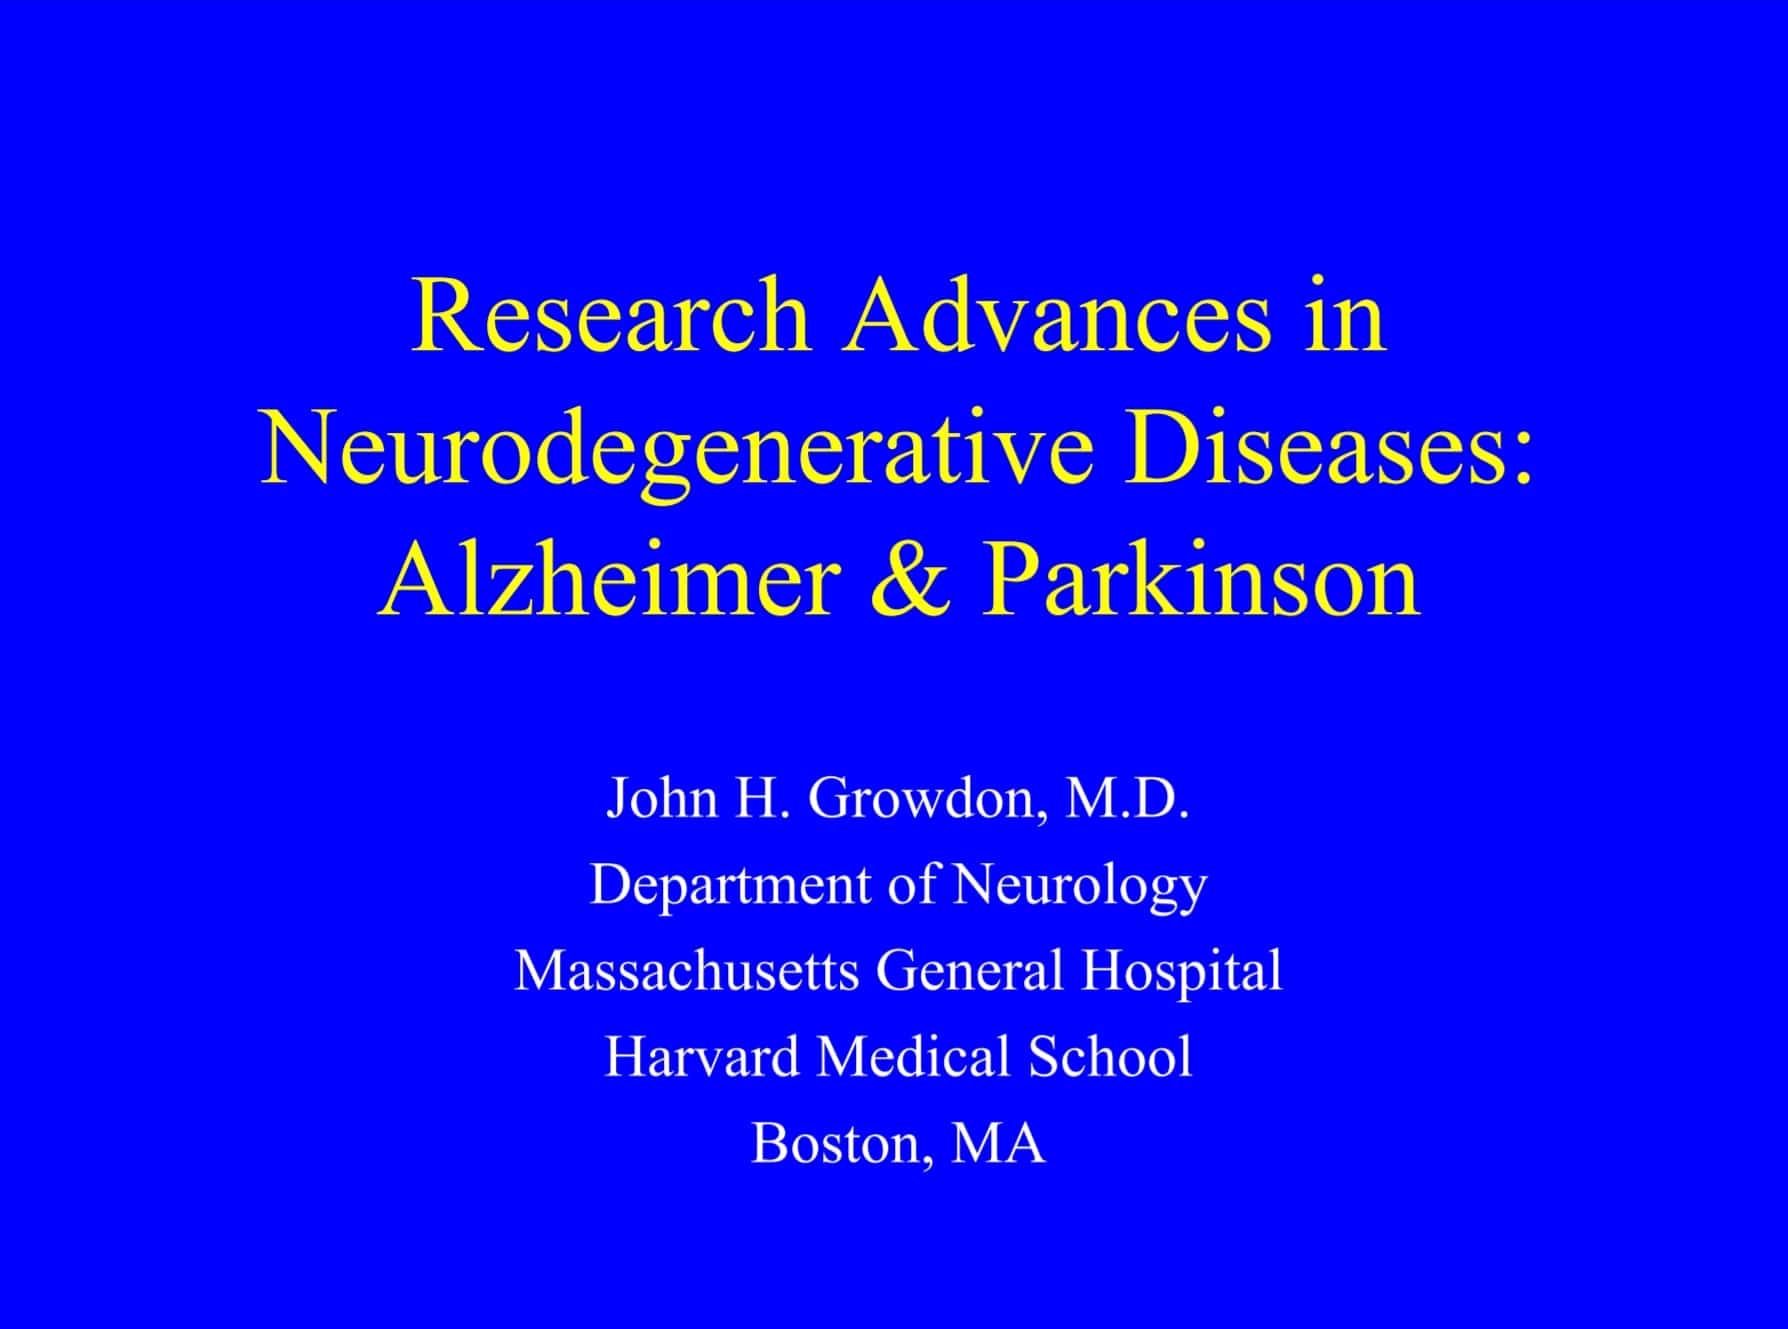 "Research Advances in Neurodegenerative Diseases" presentation cover.